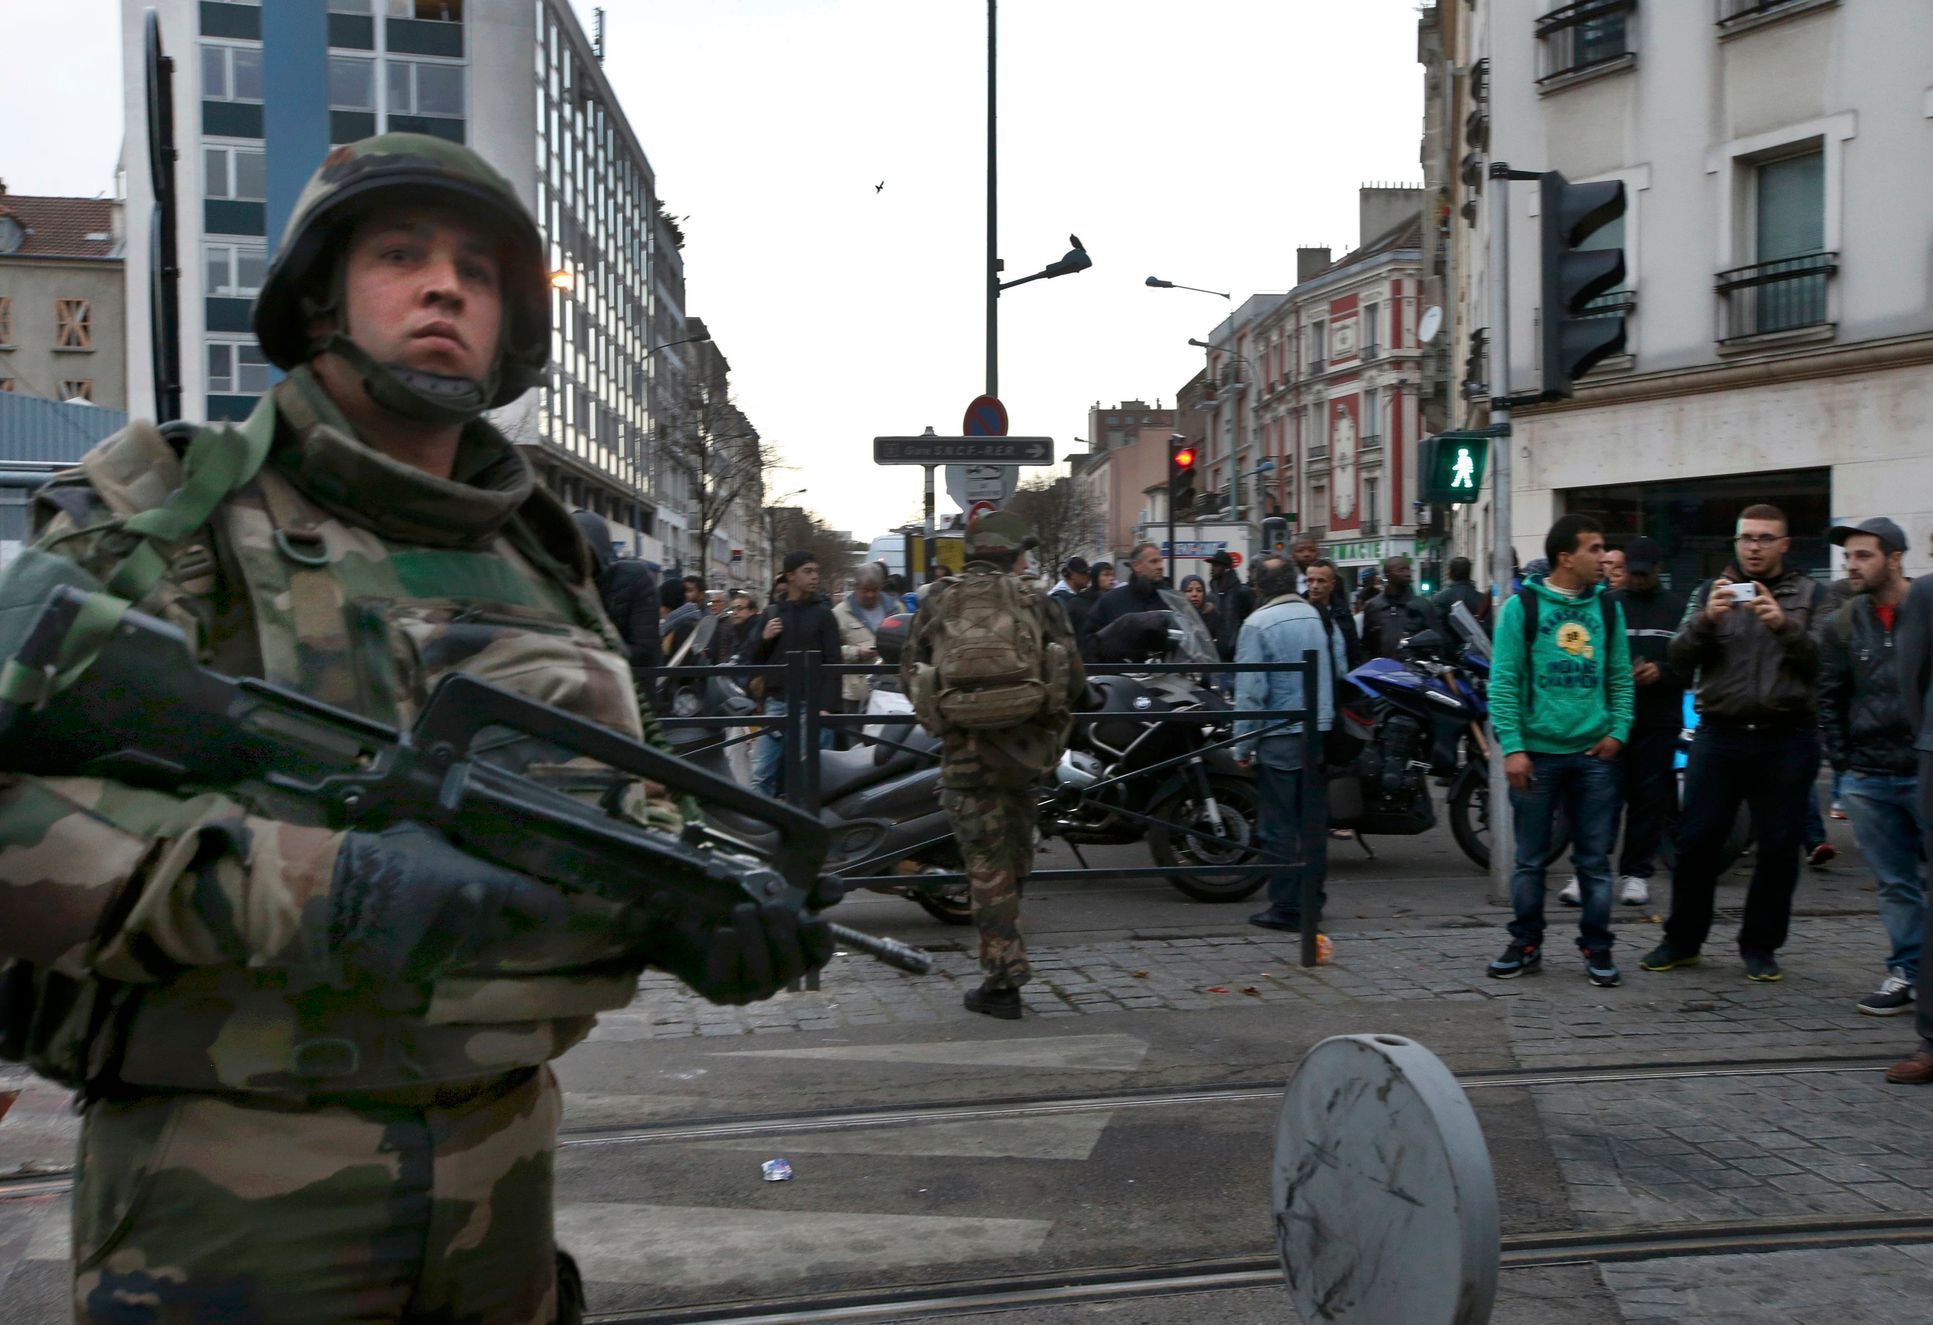 Vojáci v plné zbroji v ulicích Paříže.